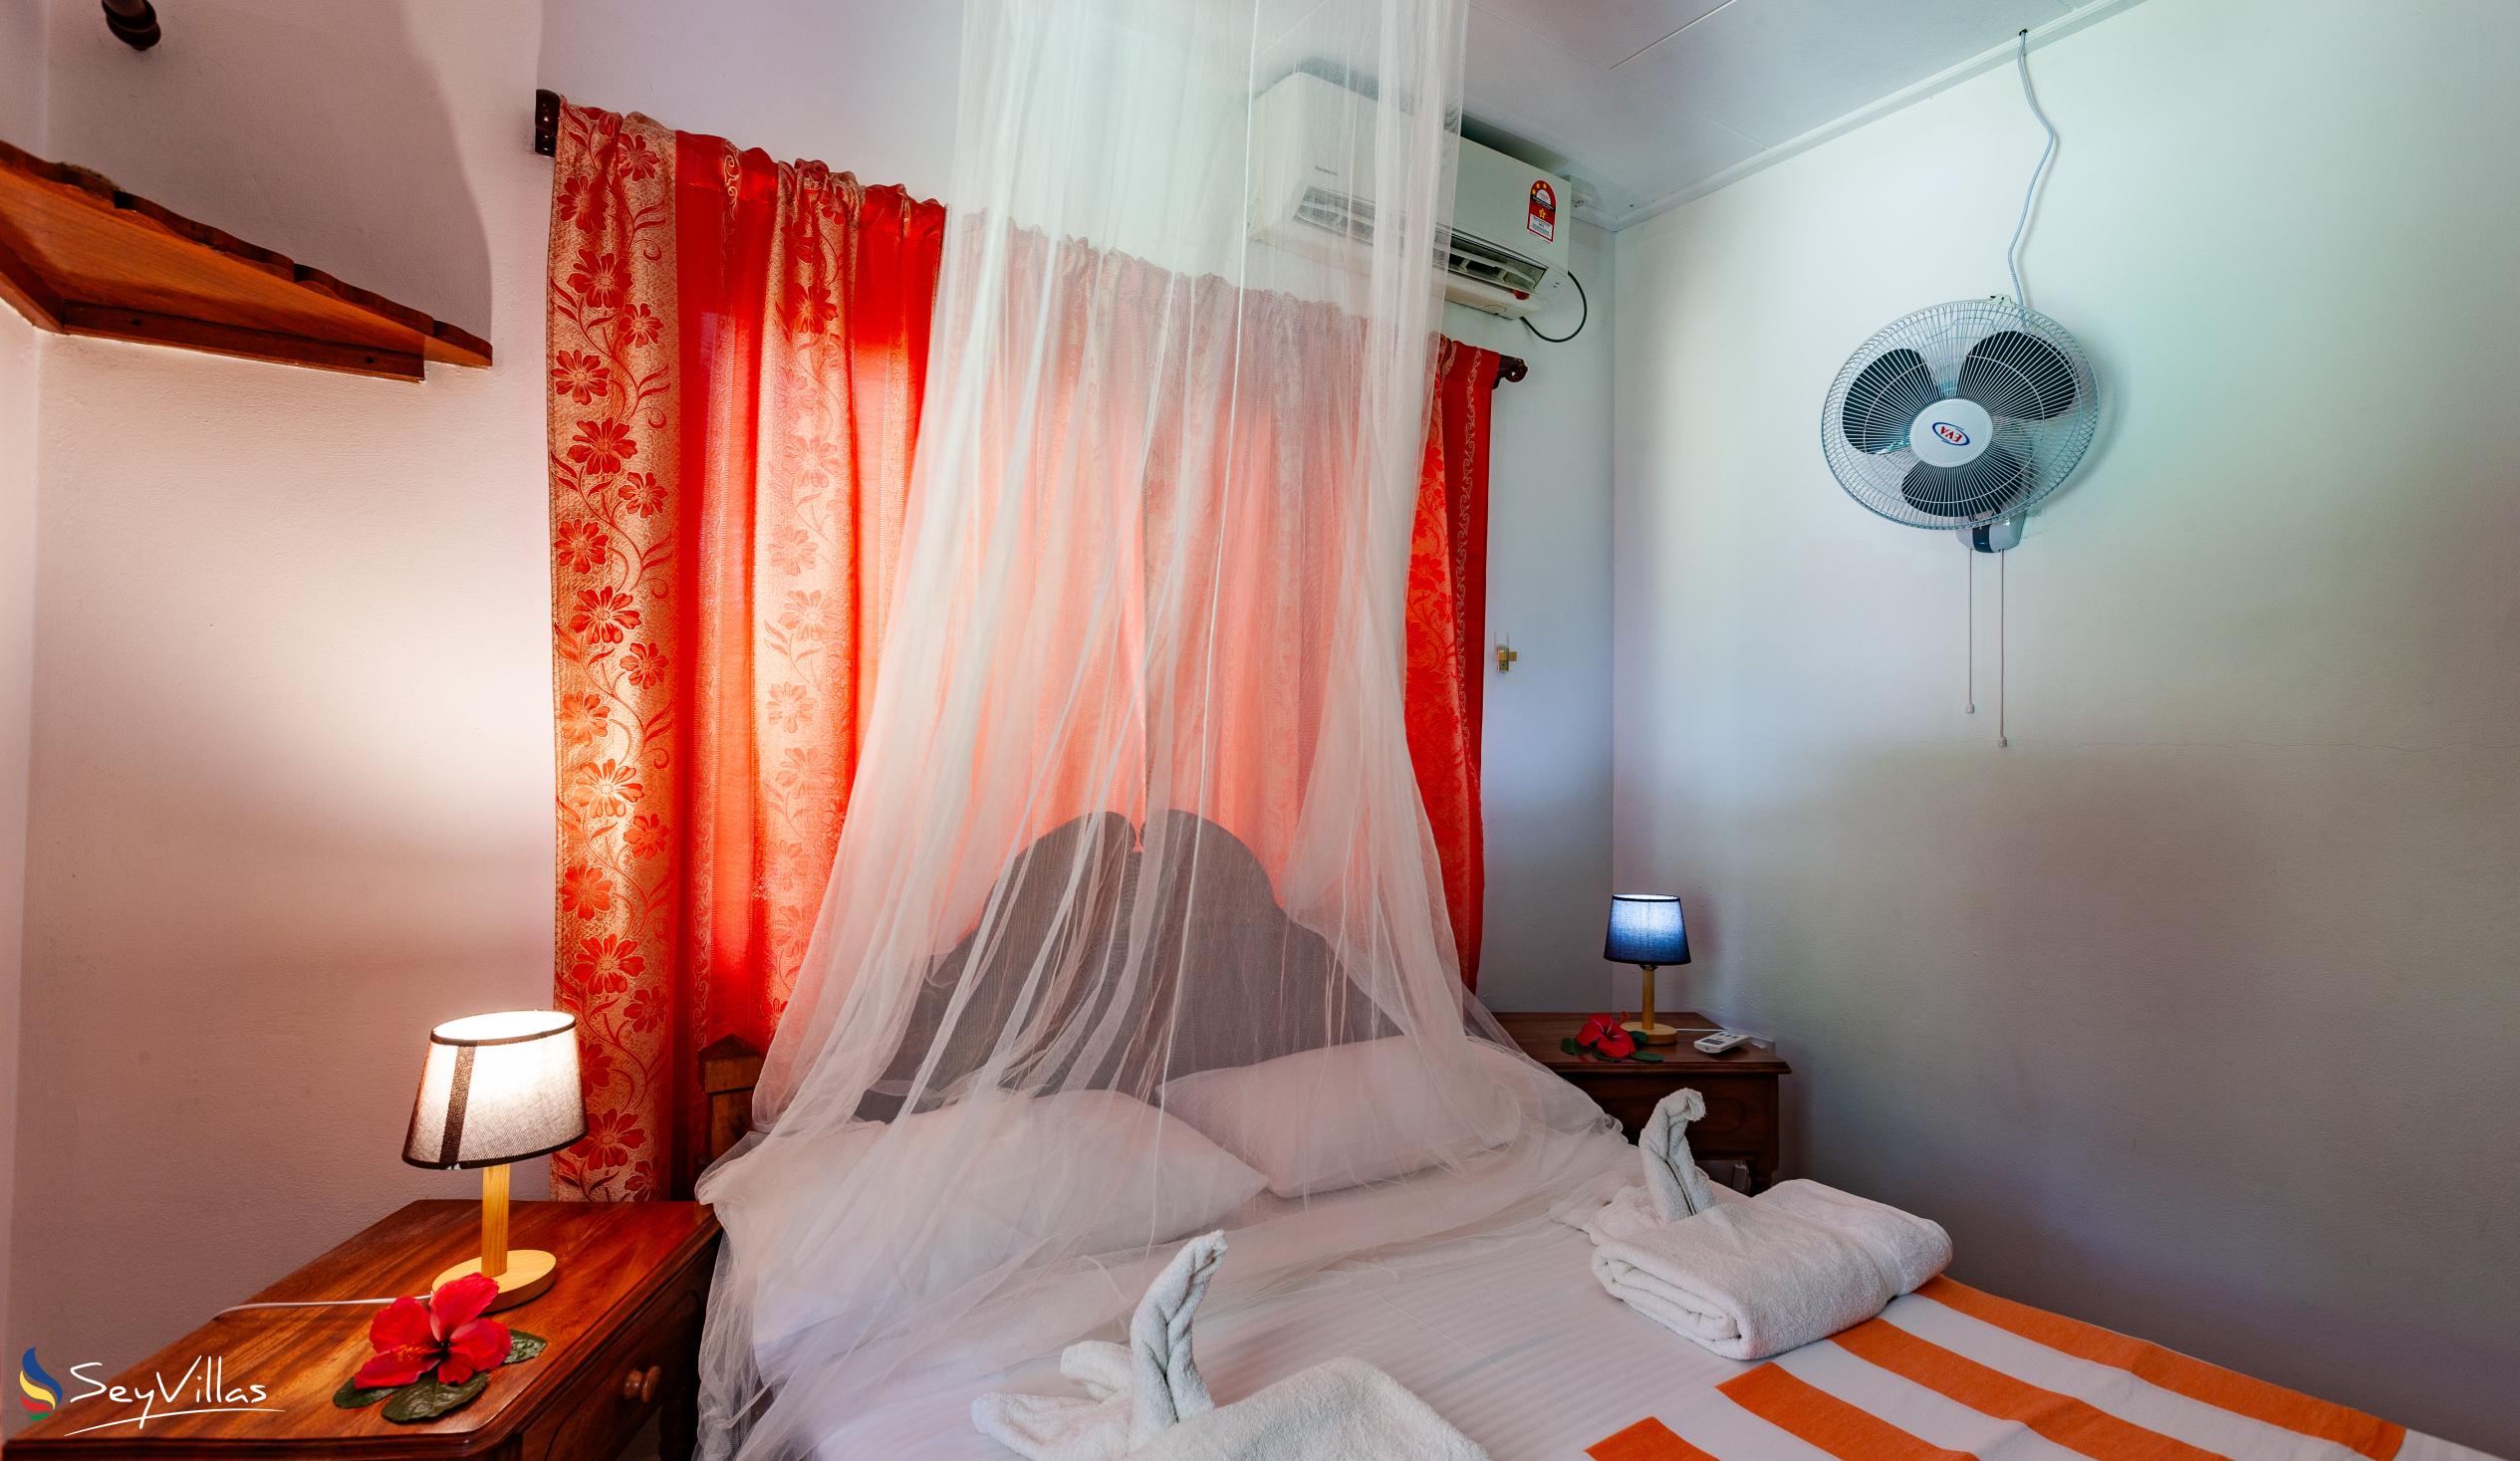 Foto 44: Dan Kazou - Appartement 2 chambres - La Digue (Seychelles)